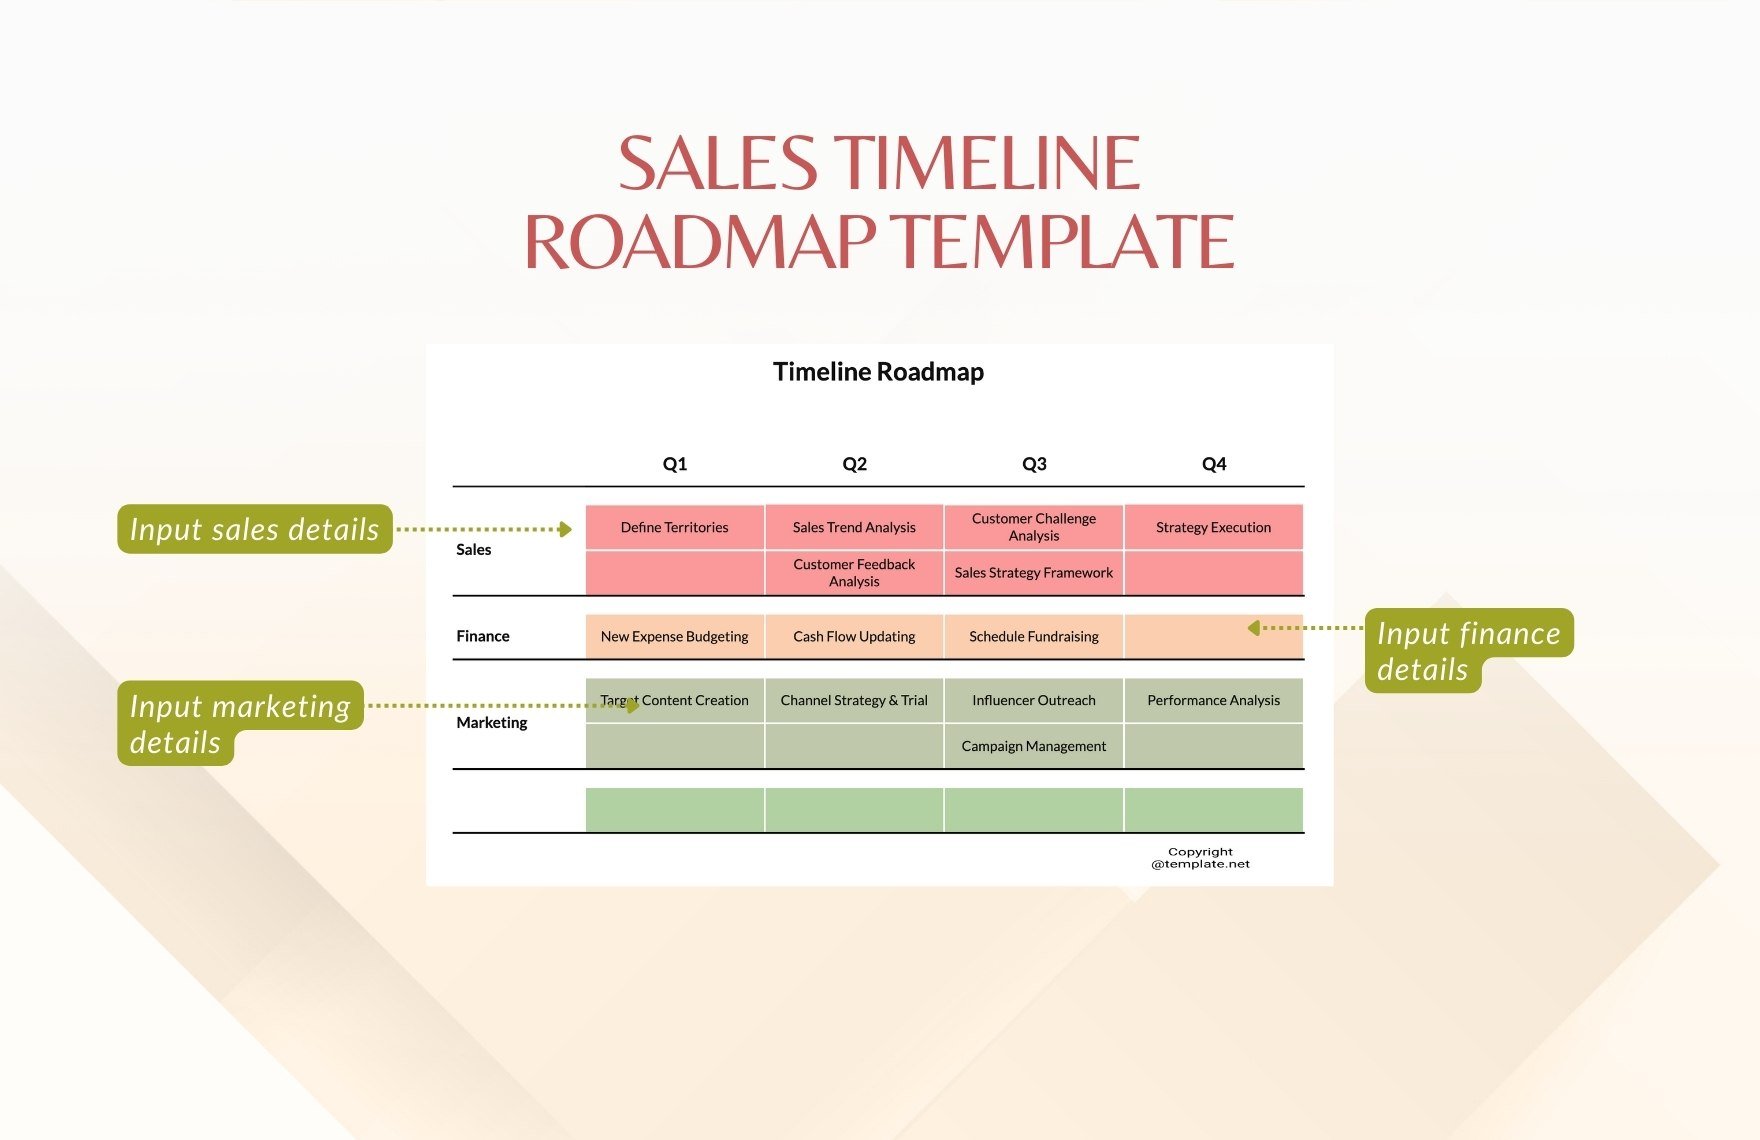 Sample Timeline Roadmap Template